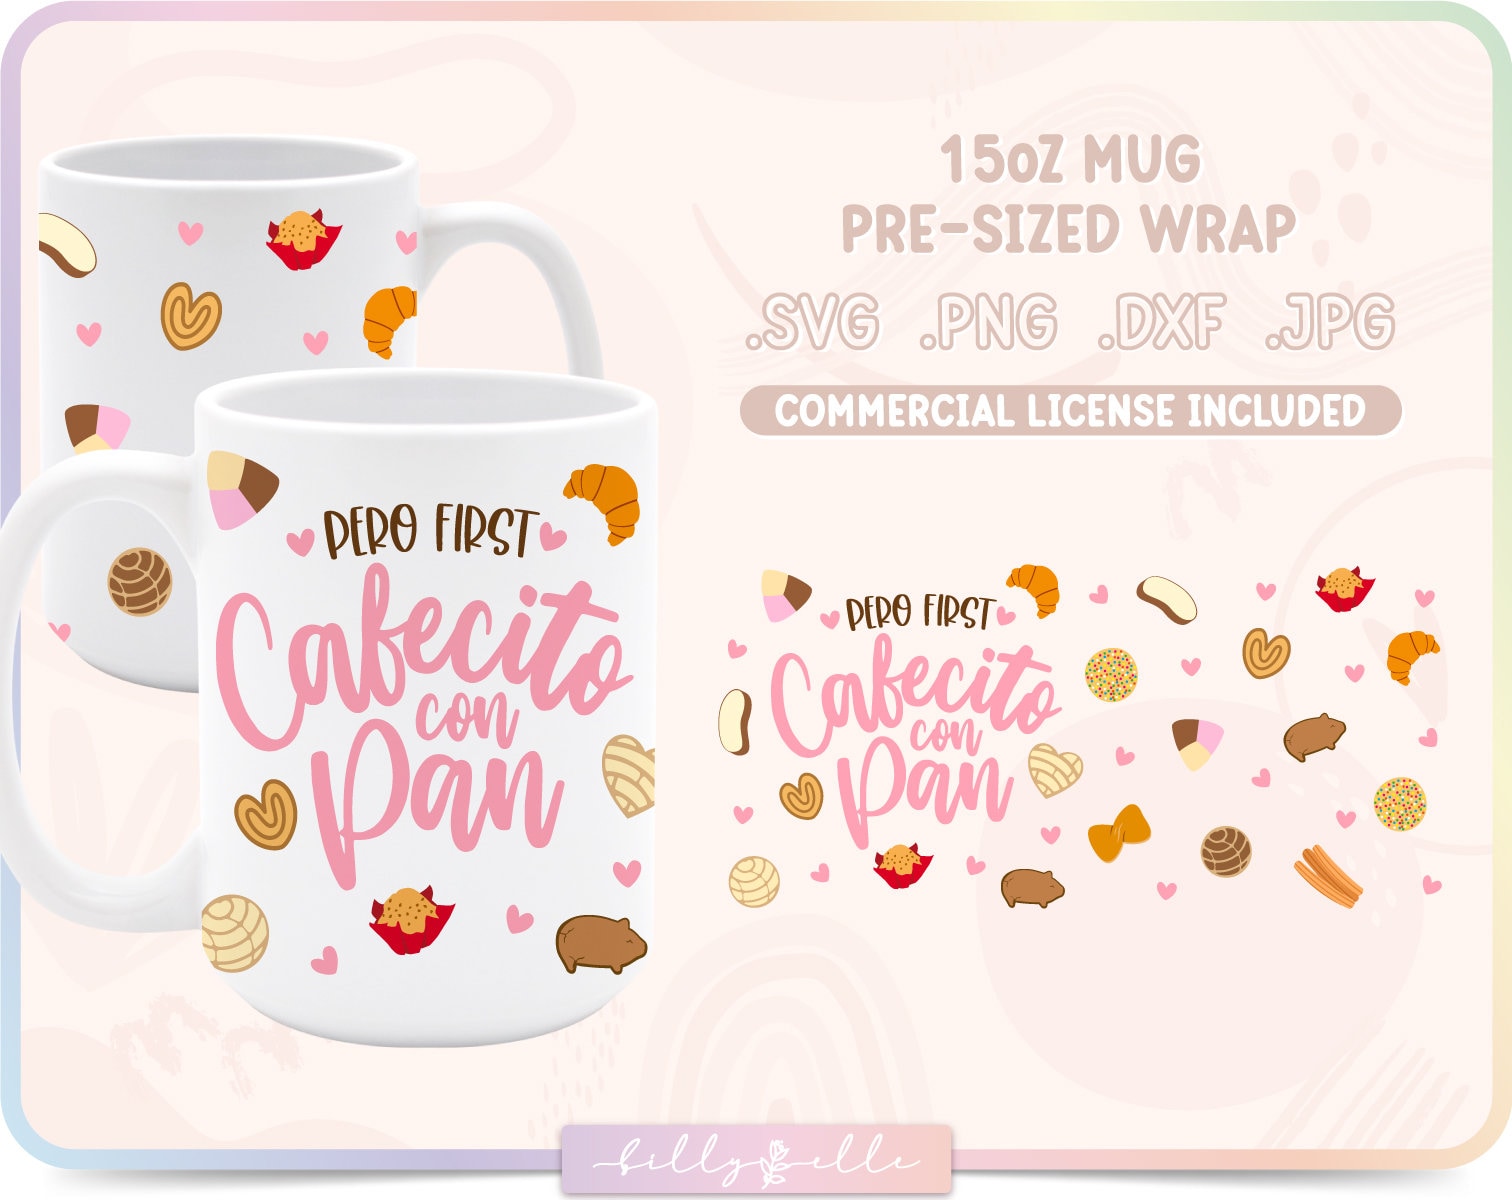 Cafecito & Pan Dulce! Mug – Crafty Creations By Cynthias